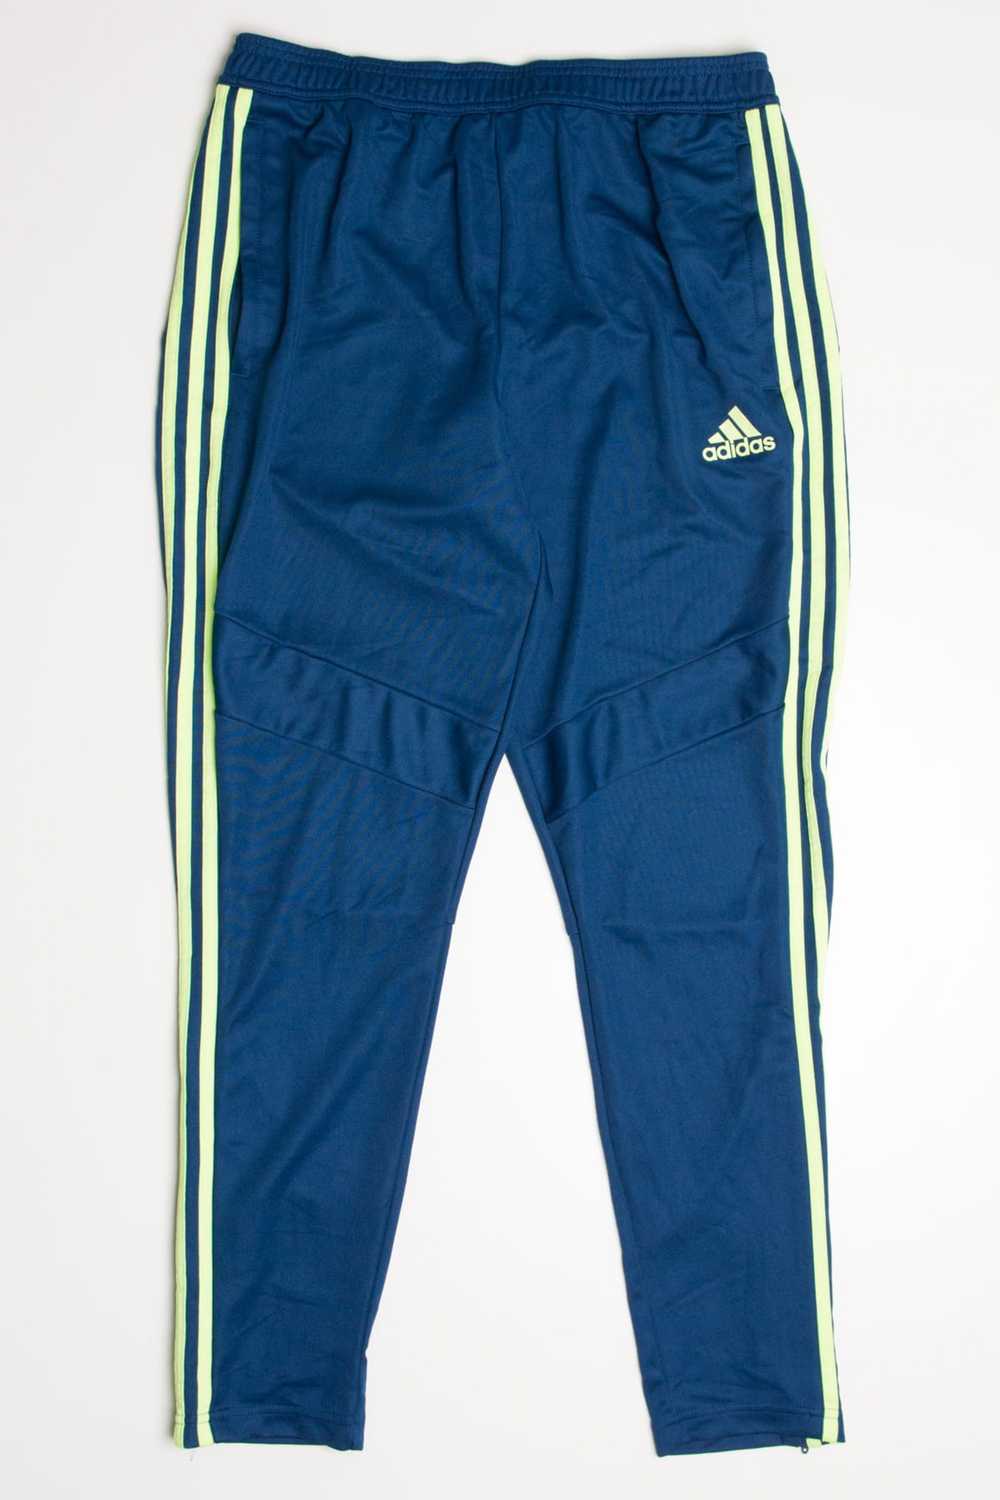 Teal & Lime Adidas Soccer Pants (sz. L) - image 1